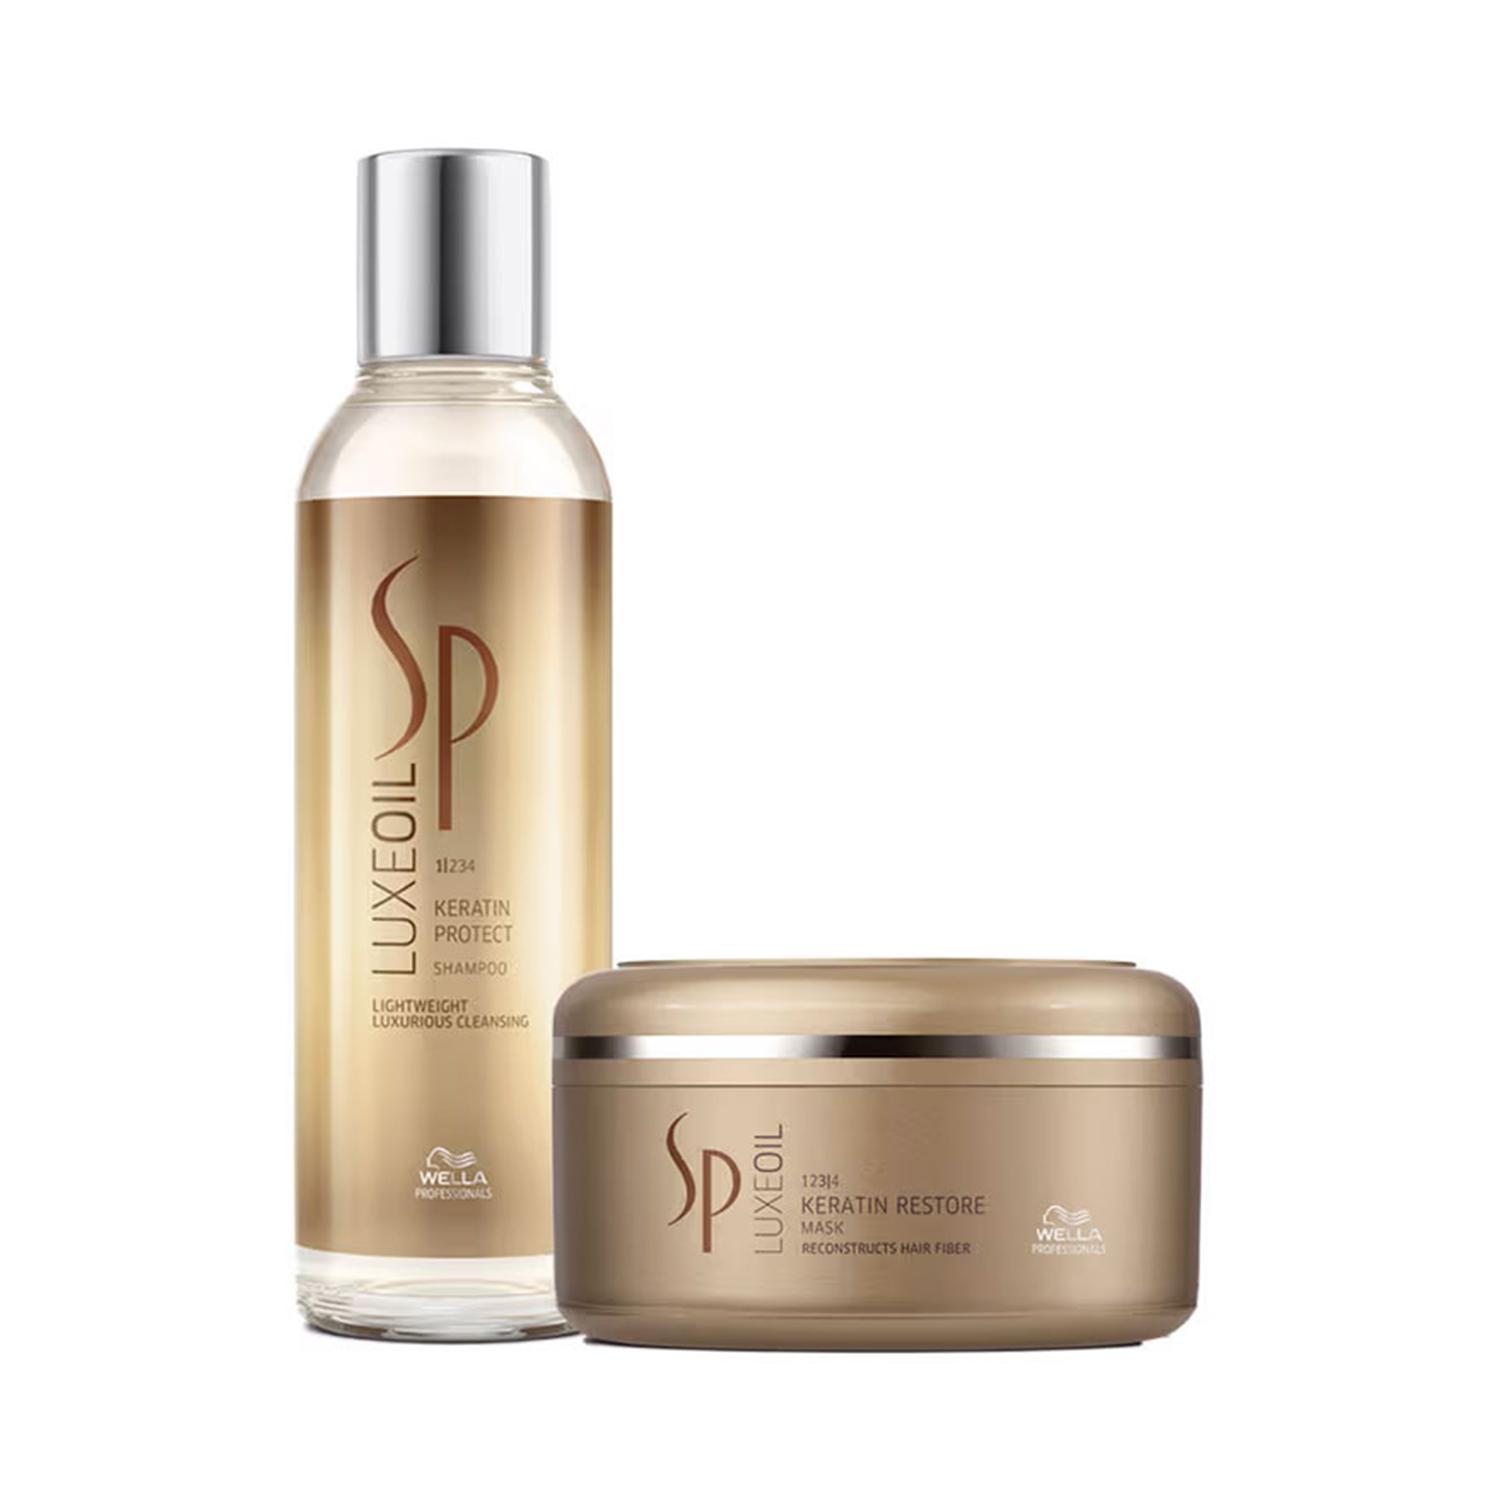 SP | SP LuxeOil Keratin Protect hair Shampoo 200 ml + Keratin Restore Mask 150 ml